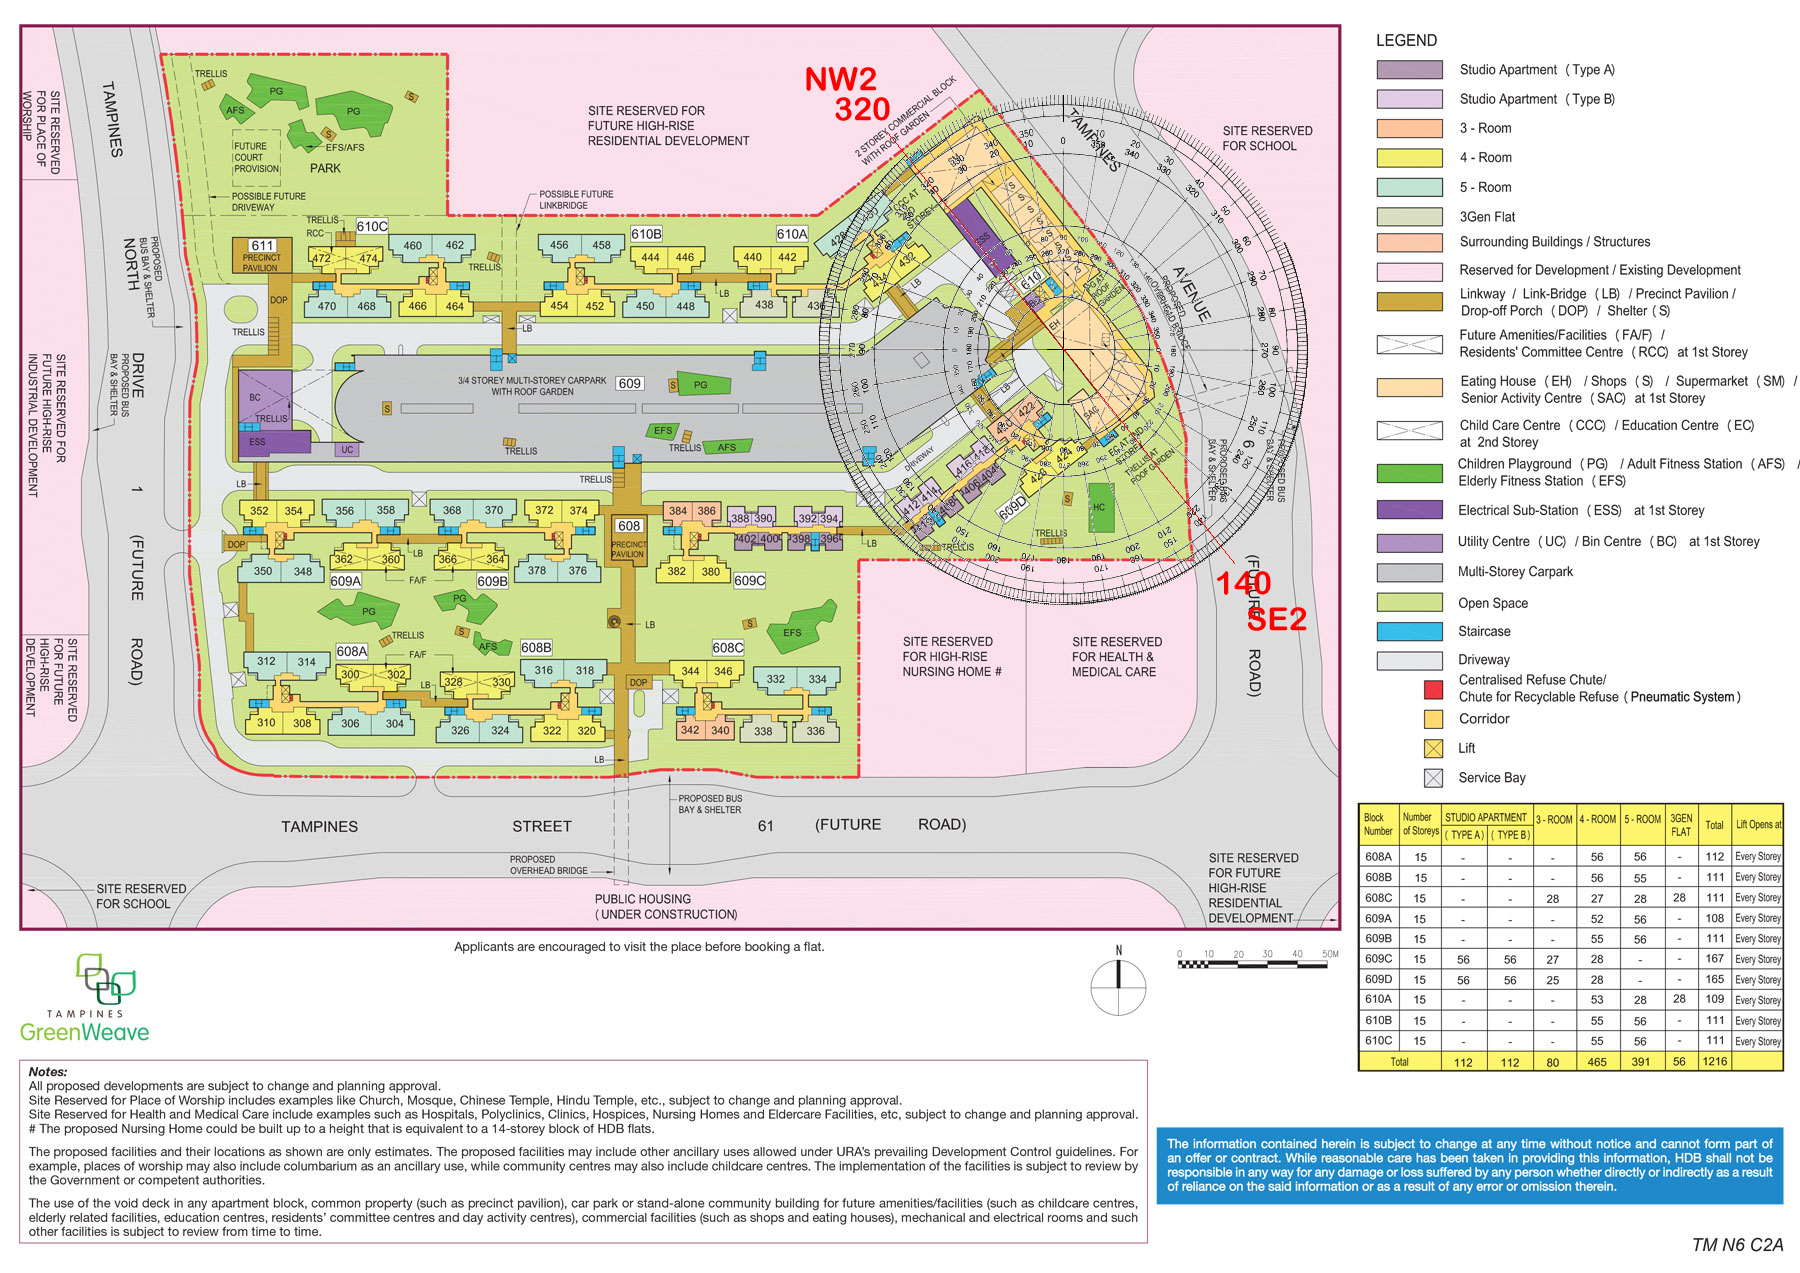 Tampines Greenverge Floor Plan / A comparison of